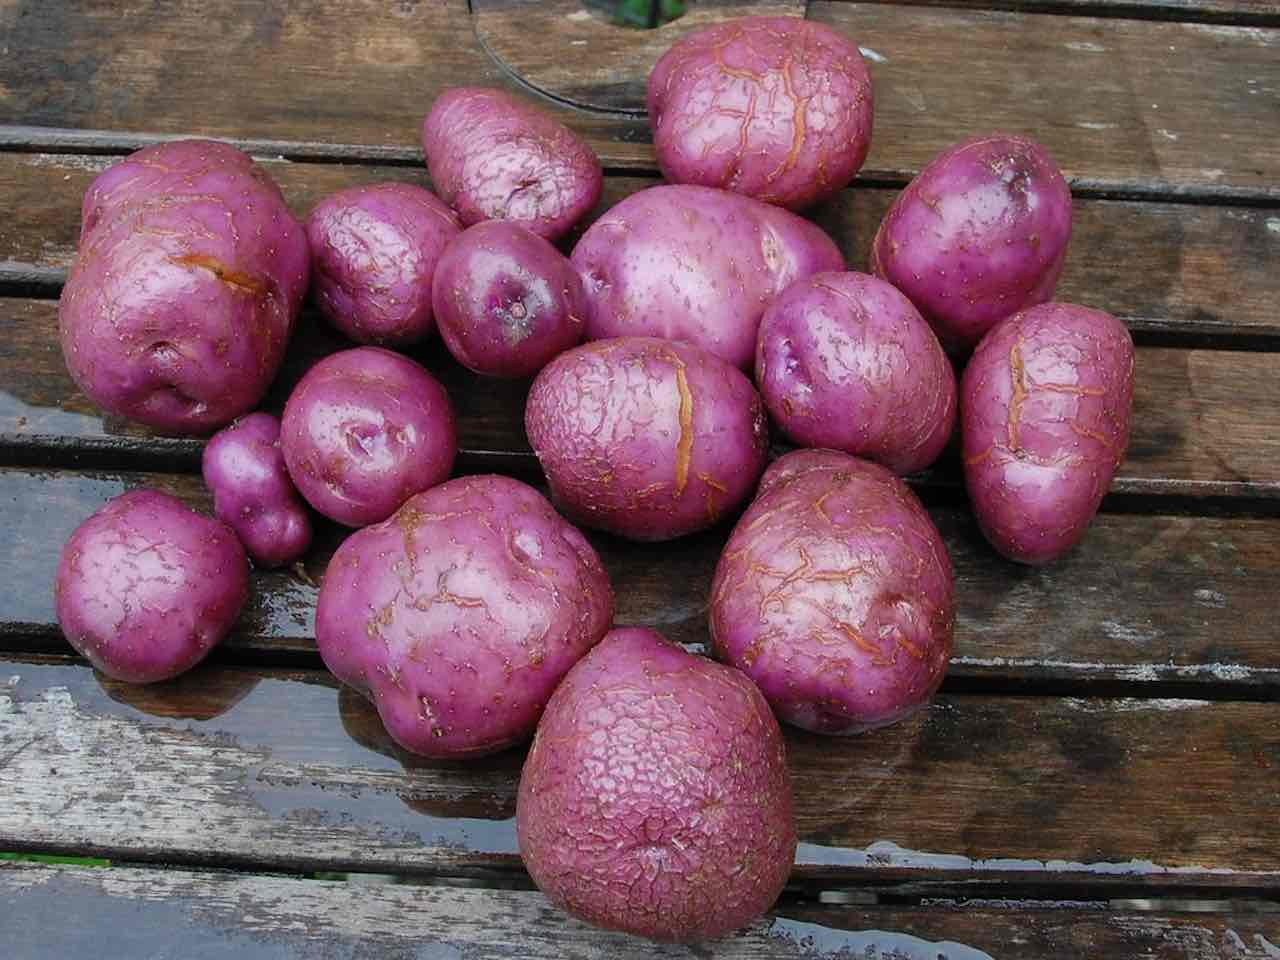 Arran Victory potatoes, with striking magenta skin